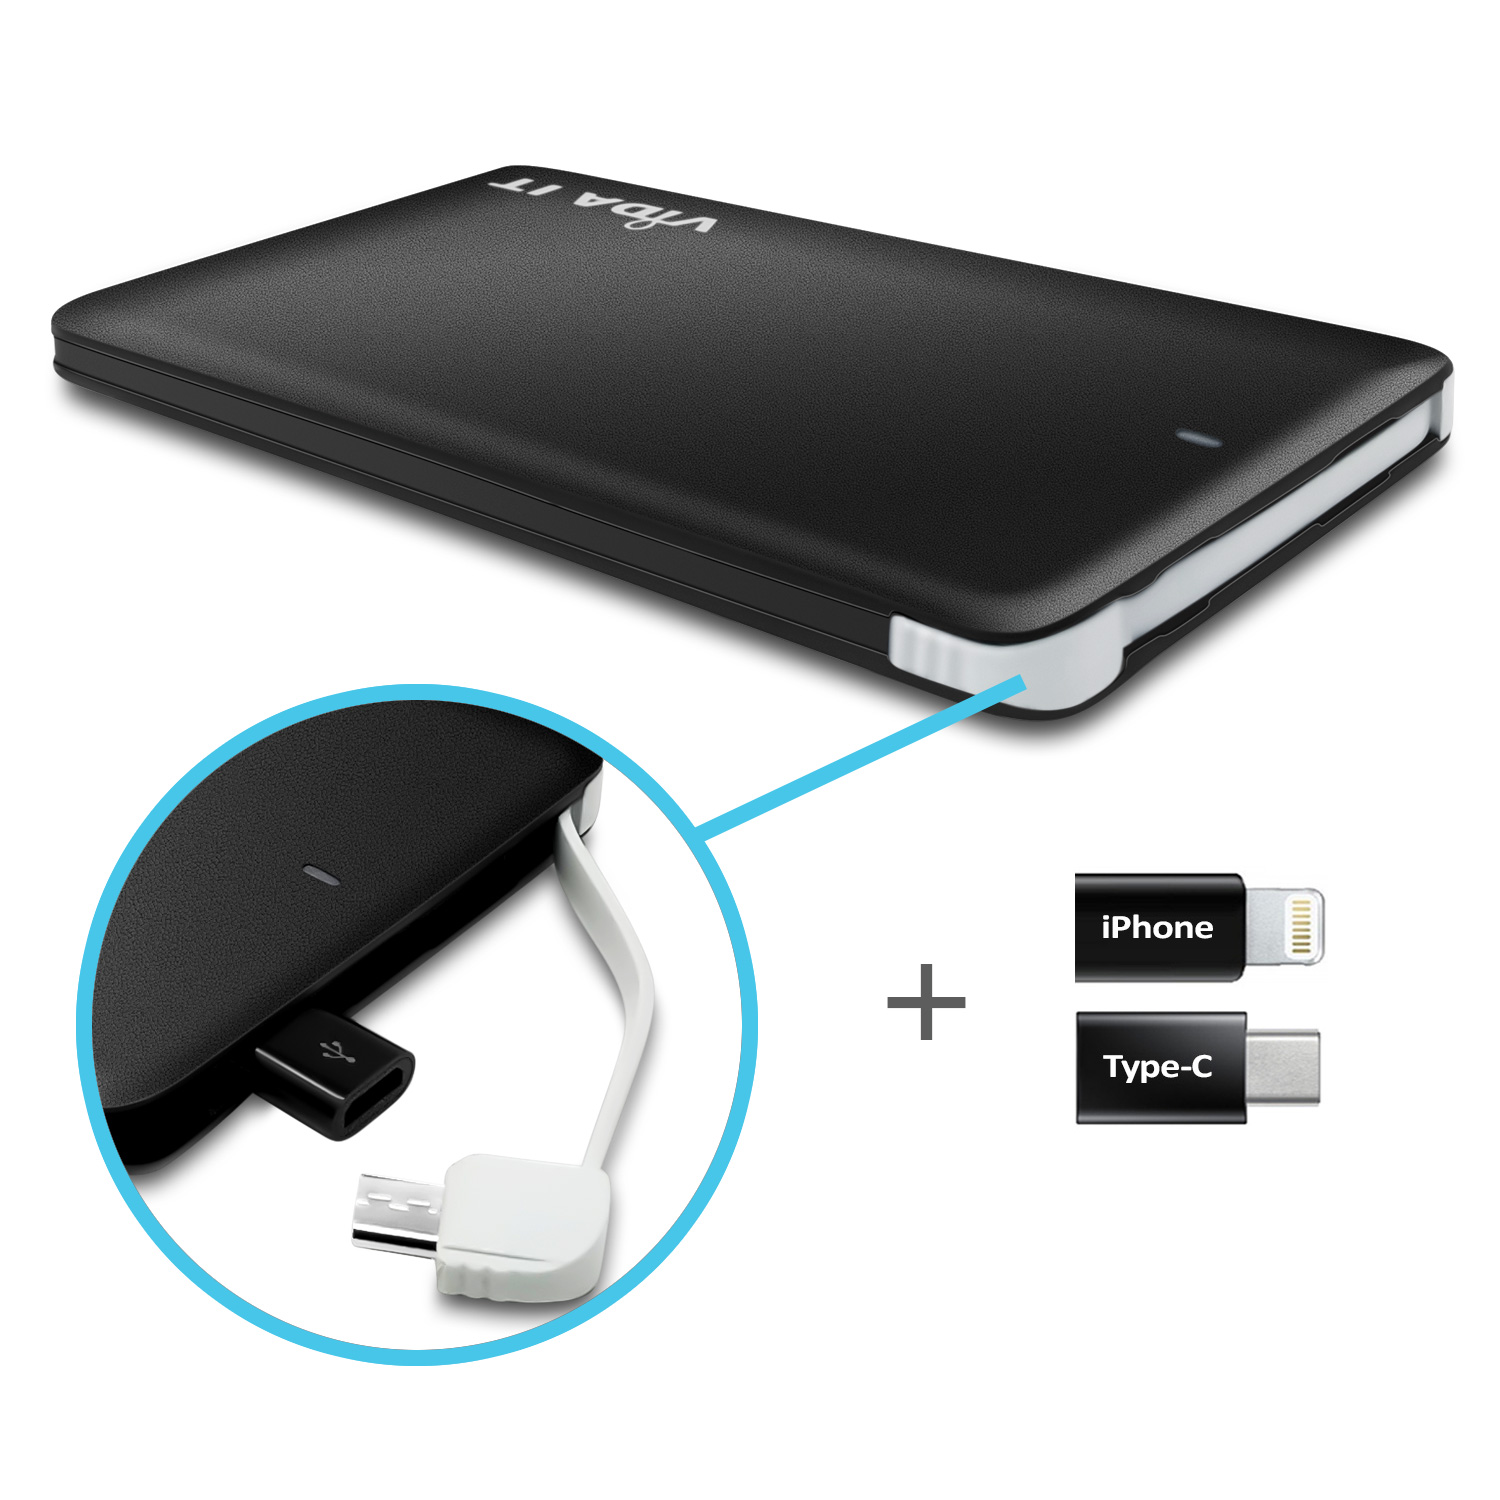 Vida IT® vCard+ Power Bank 4000mA USB Port mit Integriertes Micro USB ladekabel+ 2 Adapter: USB-C und iPhone- - Schwarz